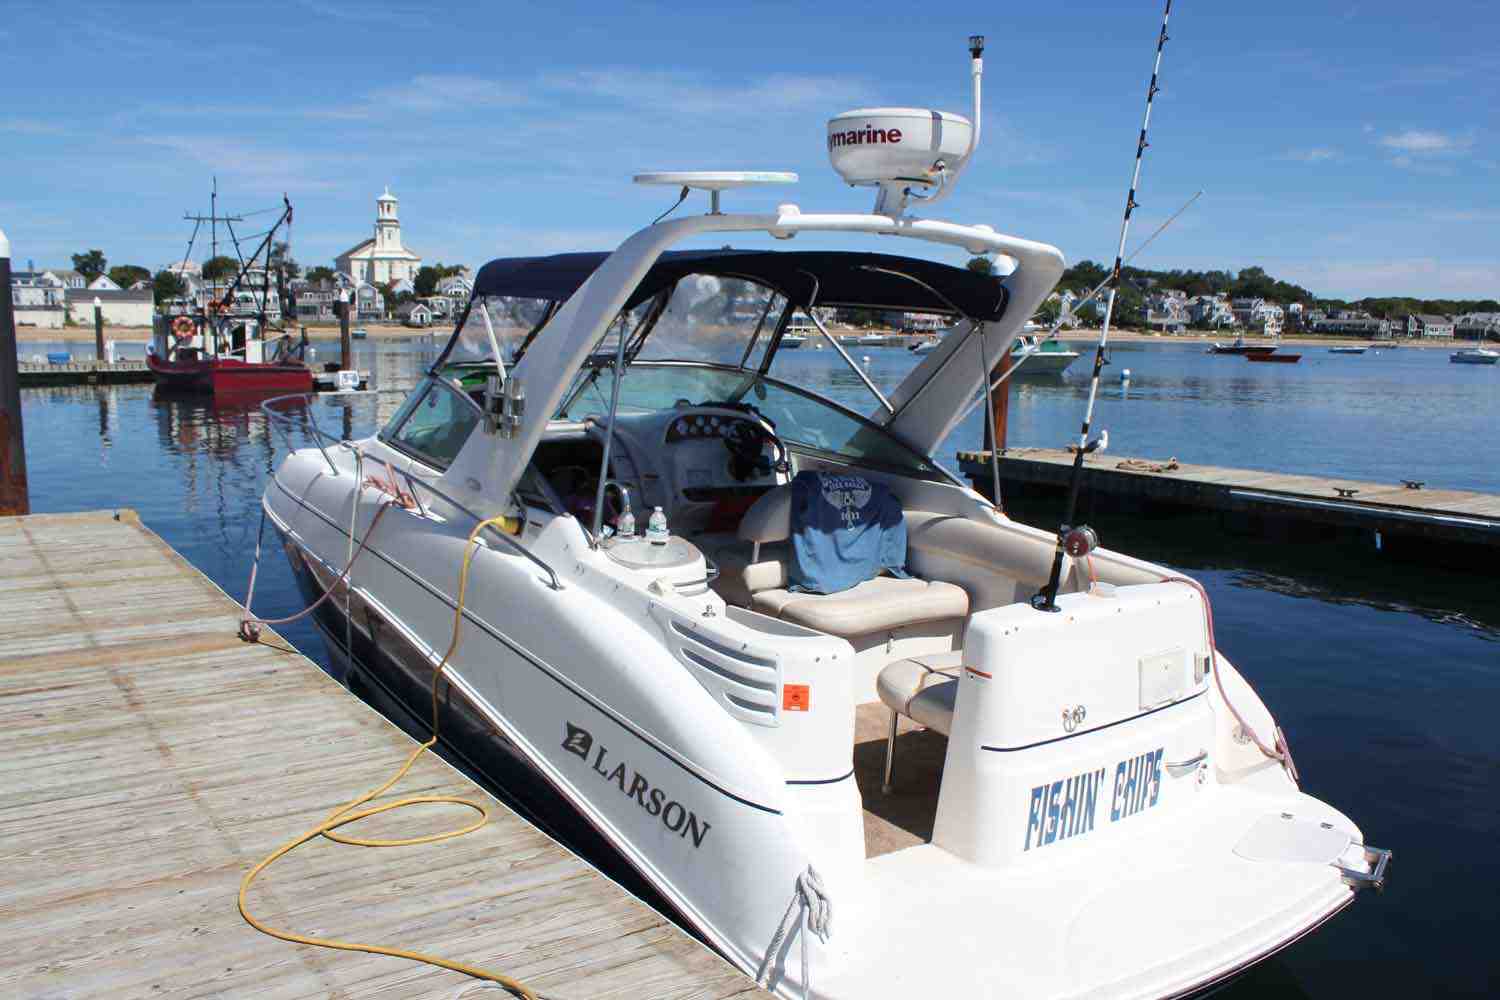  boat rentals Massachusetts CHARLESTOWN Massachusetts  larson 274 cabrio 2005 28 